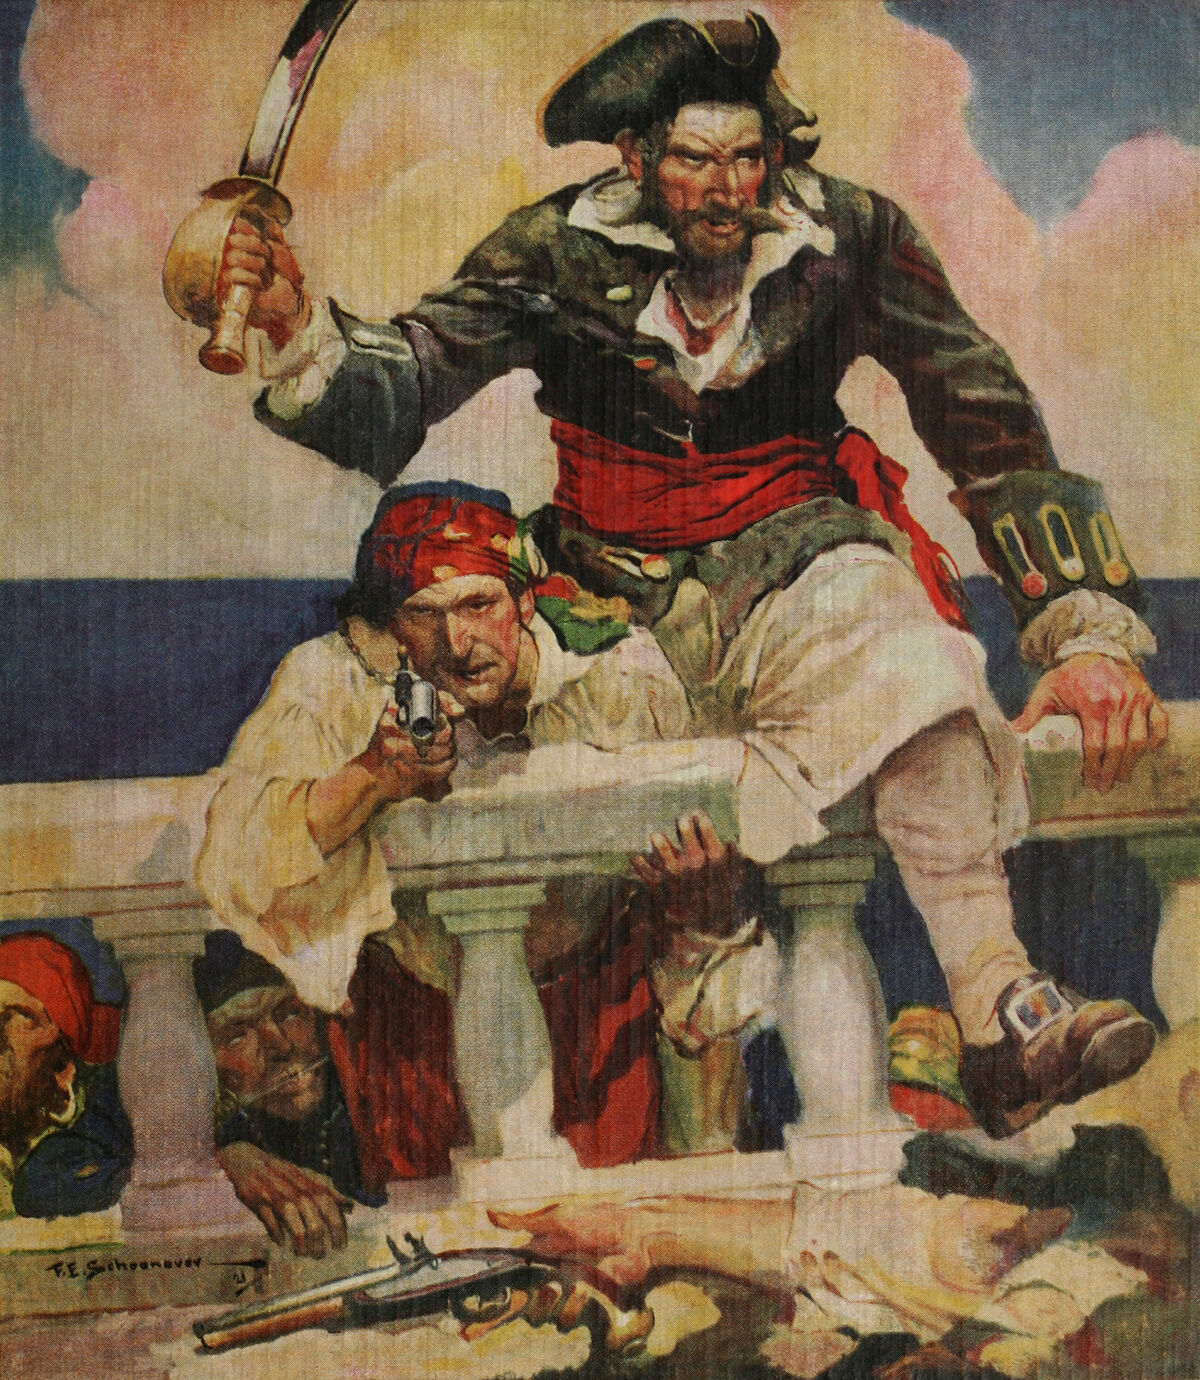 Golden Age of Piracy - Wikipedia